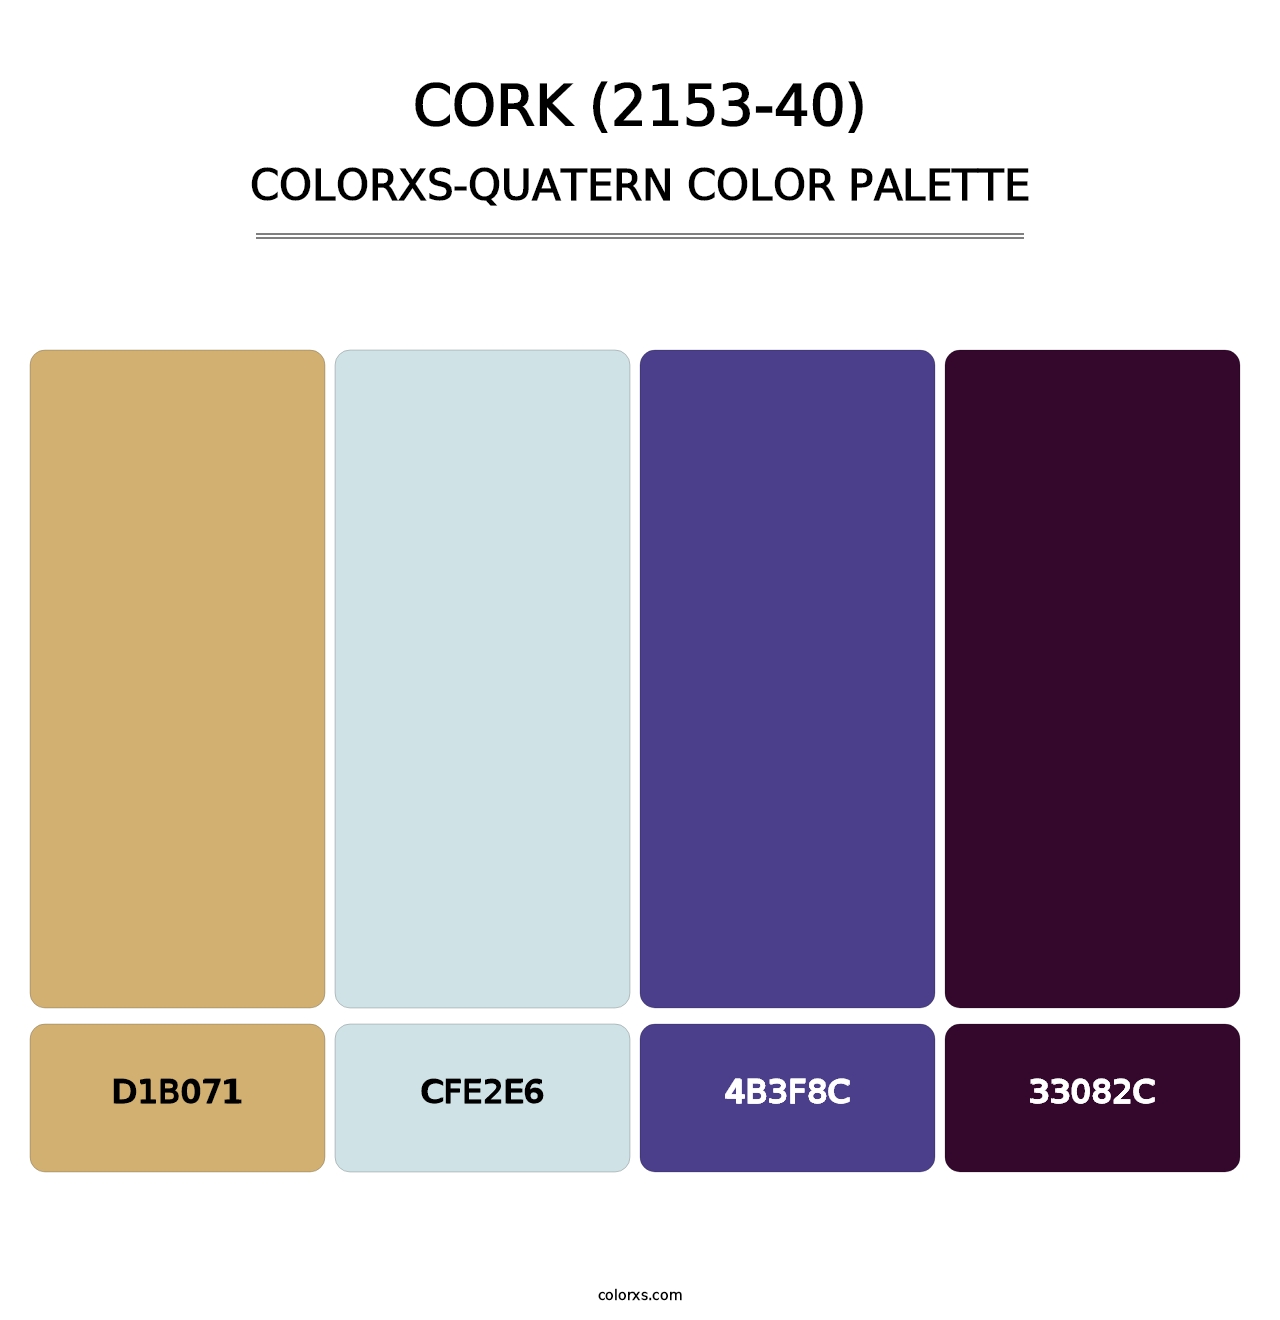 Cork (2153-40) - Colorxs Quatern Palette